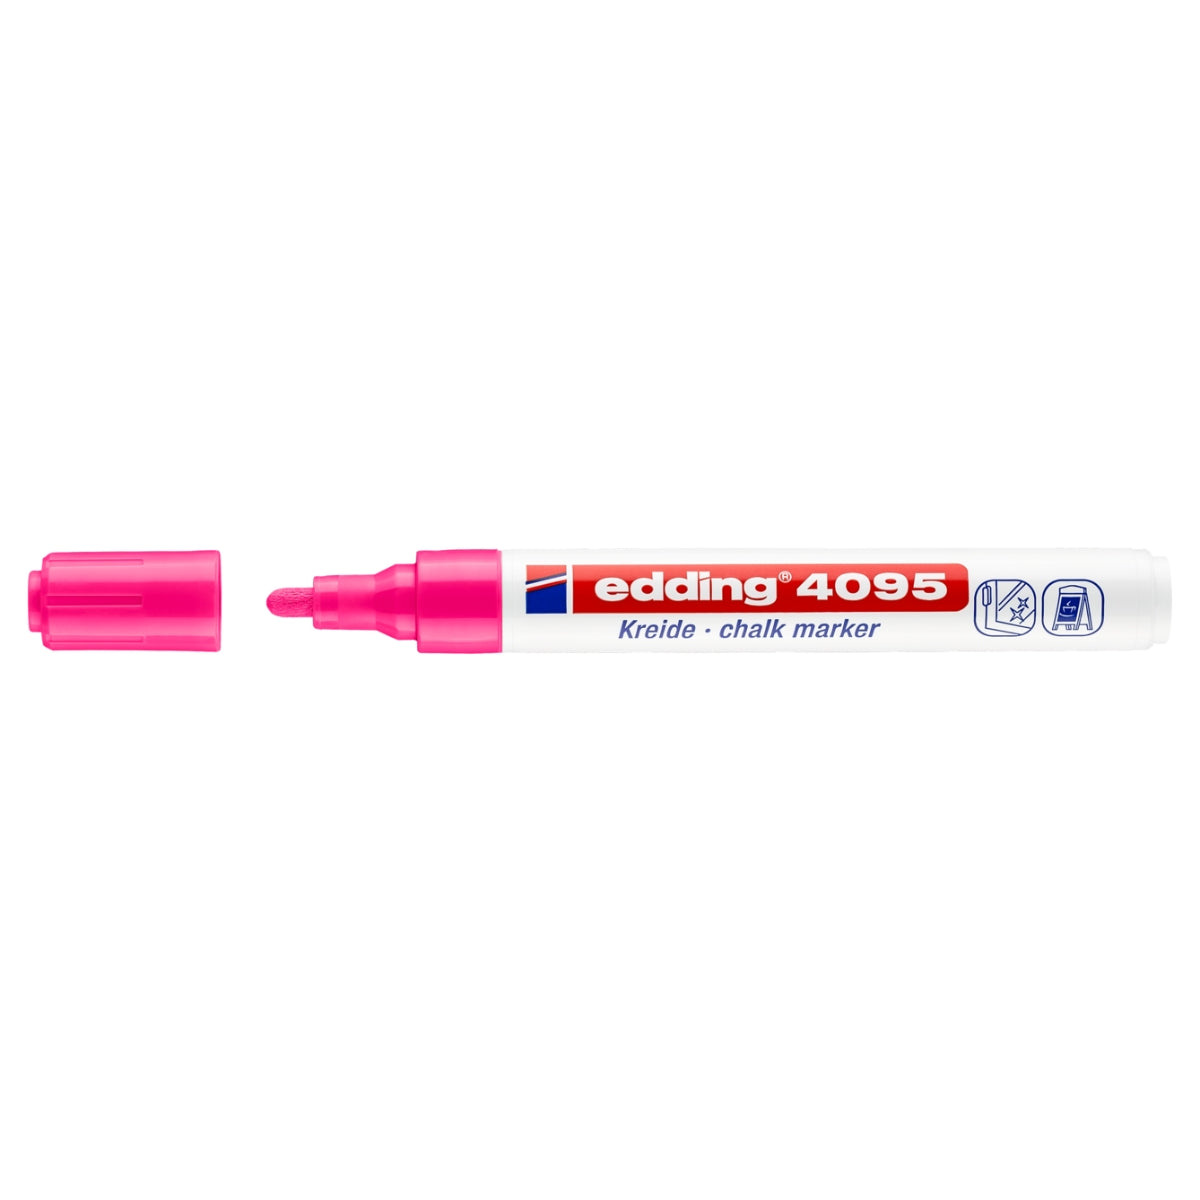 edding 4095 Chalk Marker, 2-3mm Bullet Tip, Neon Pink